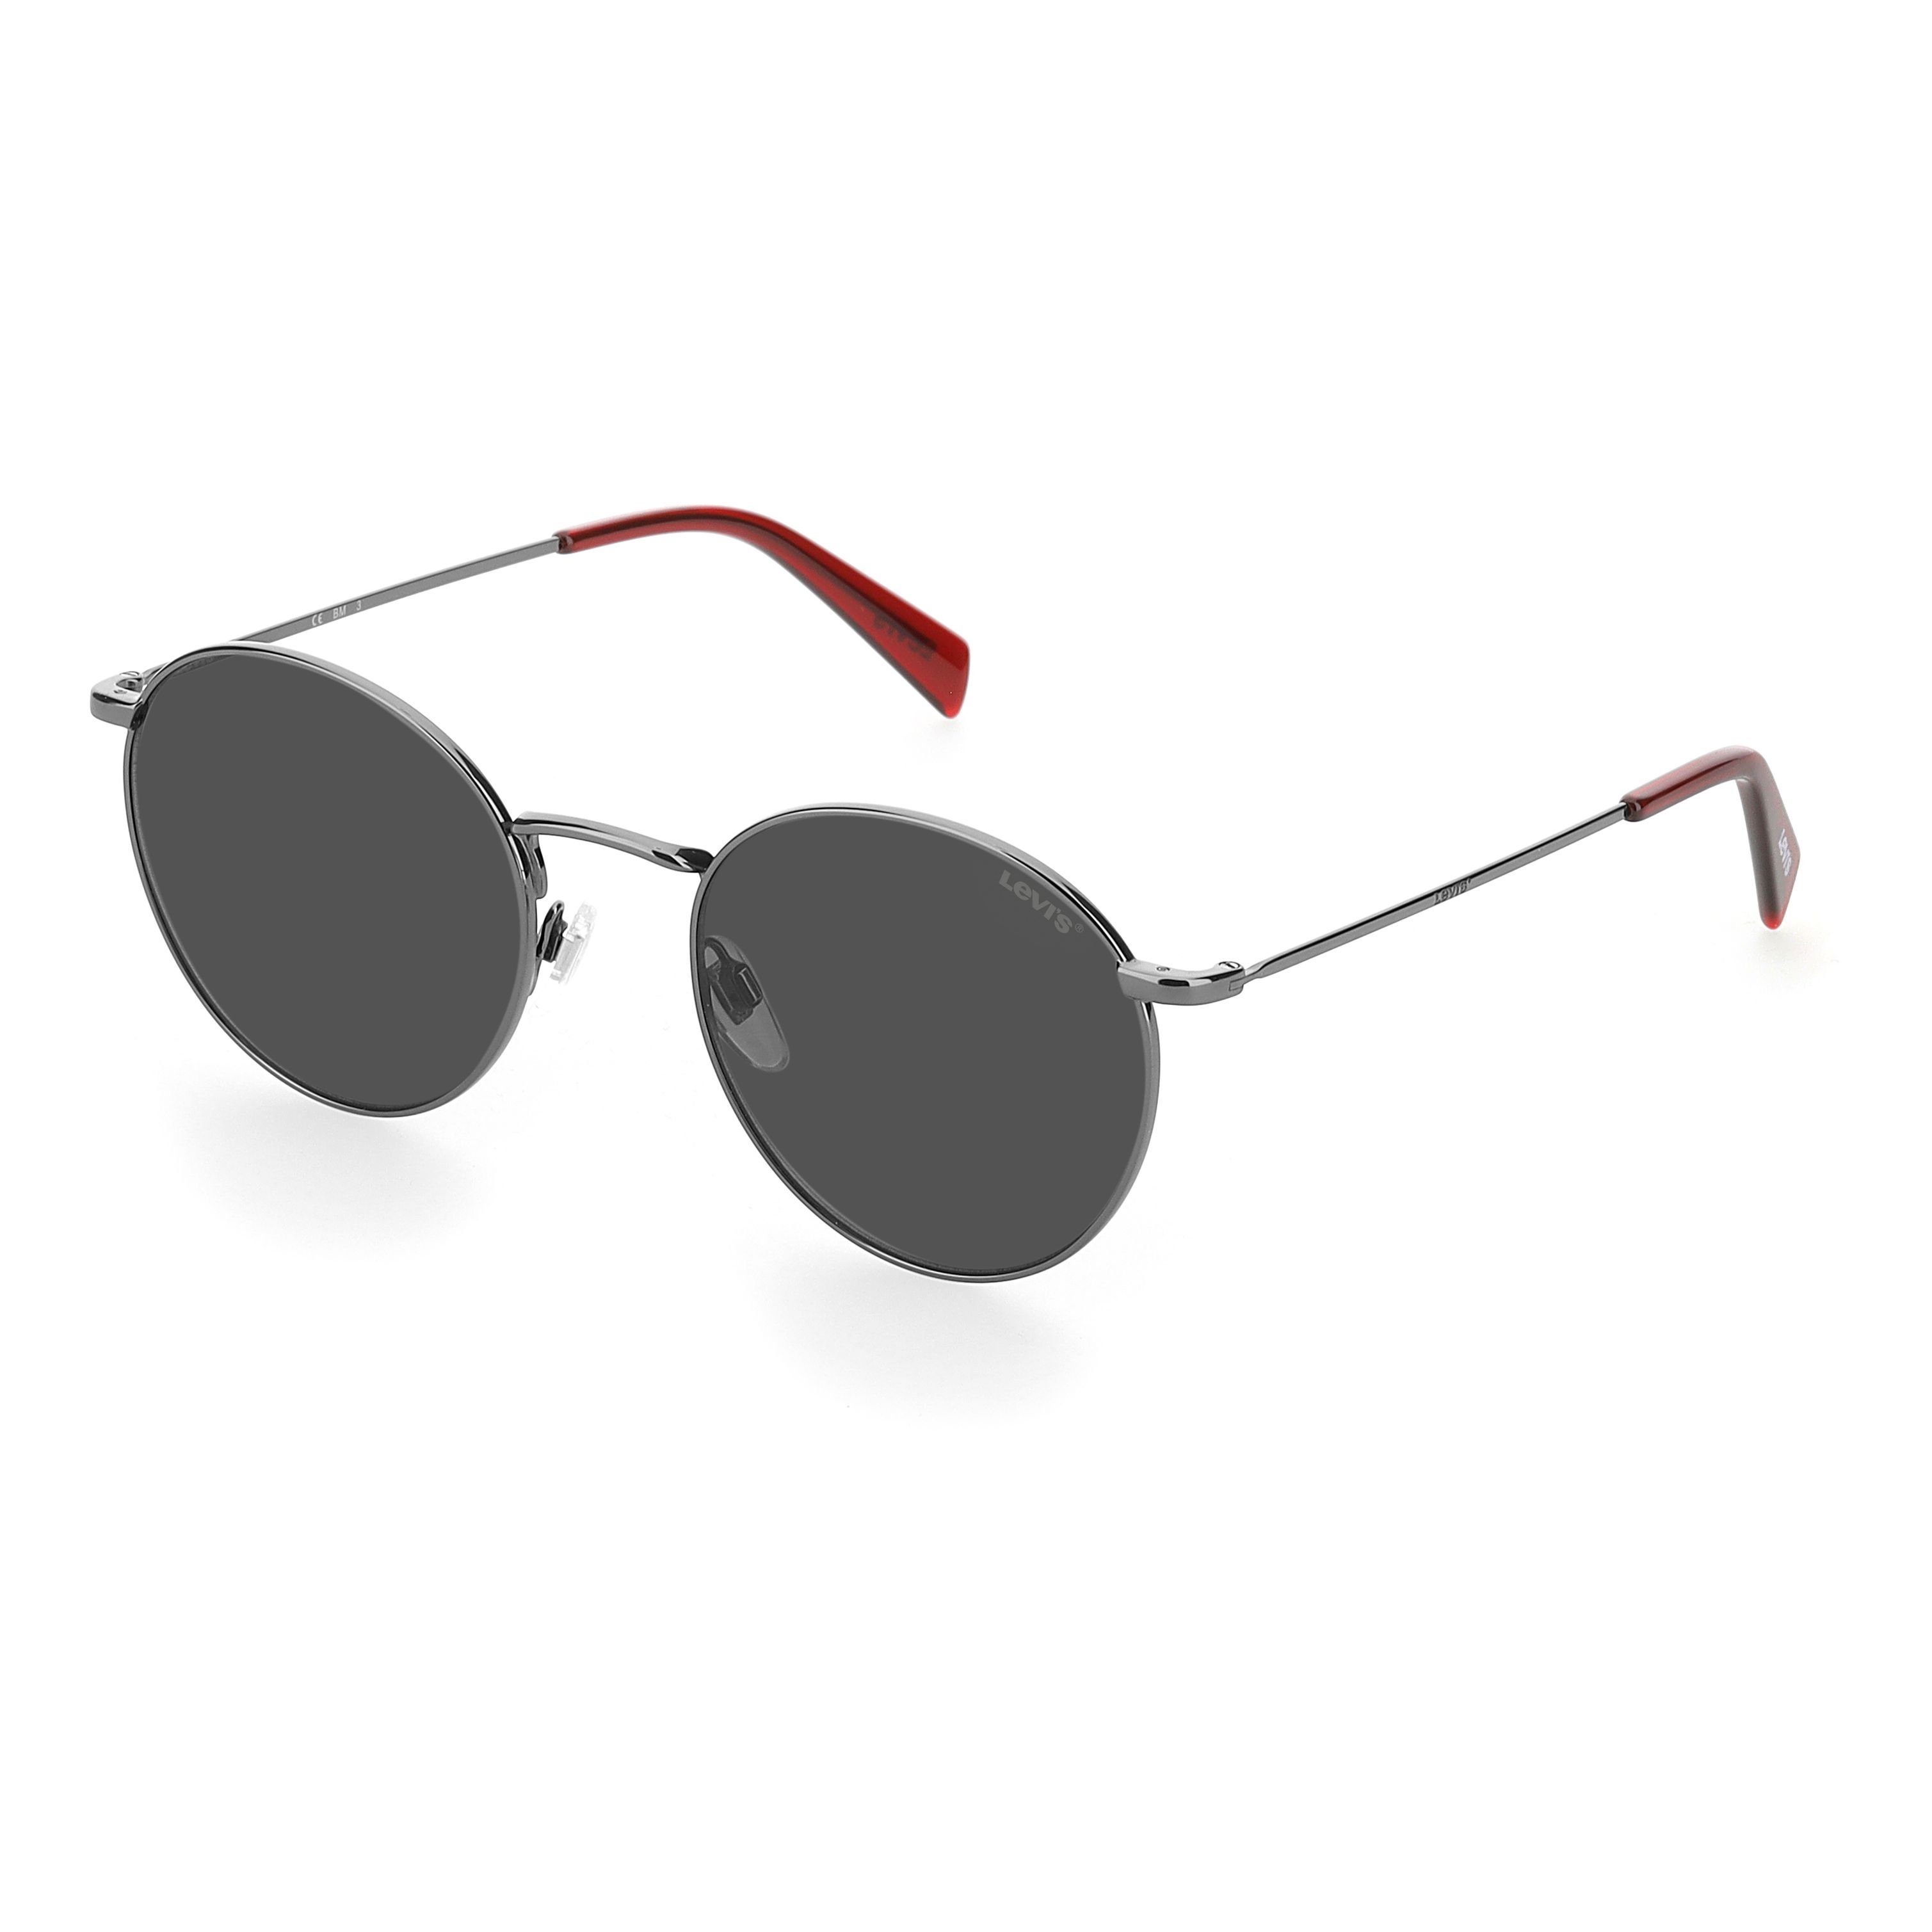 LV 1005 S Round Sunglasses 9N2 IR - size 52